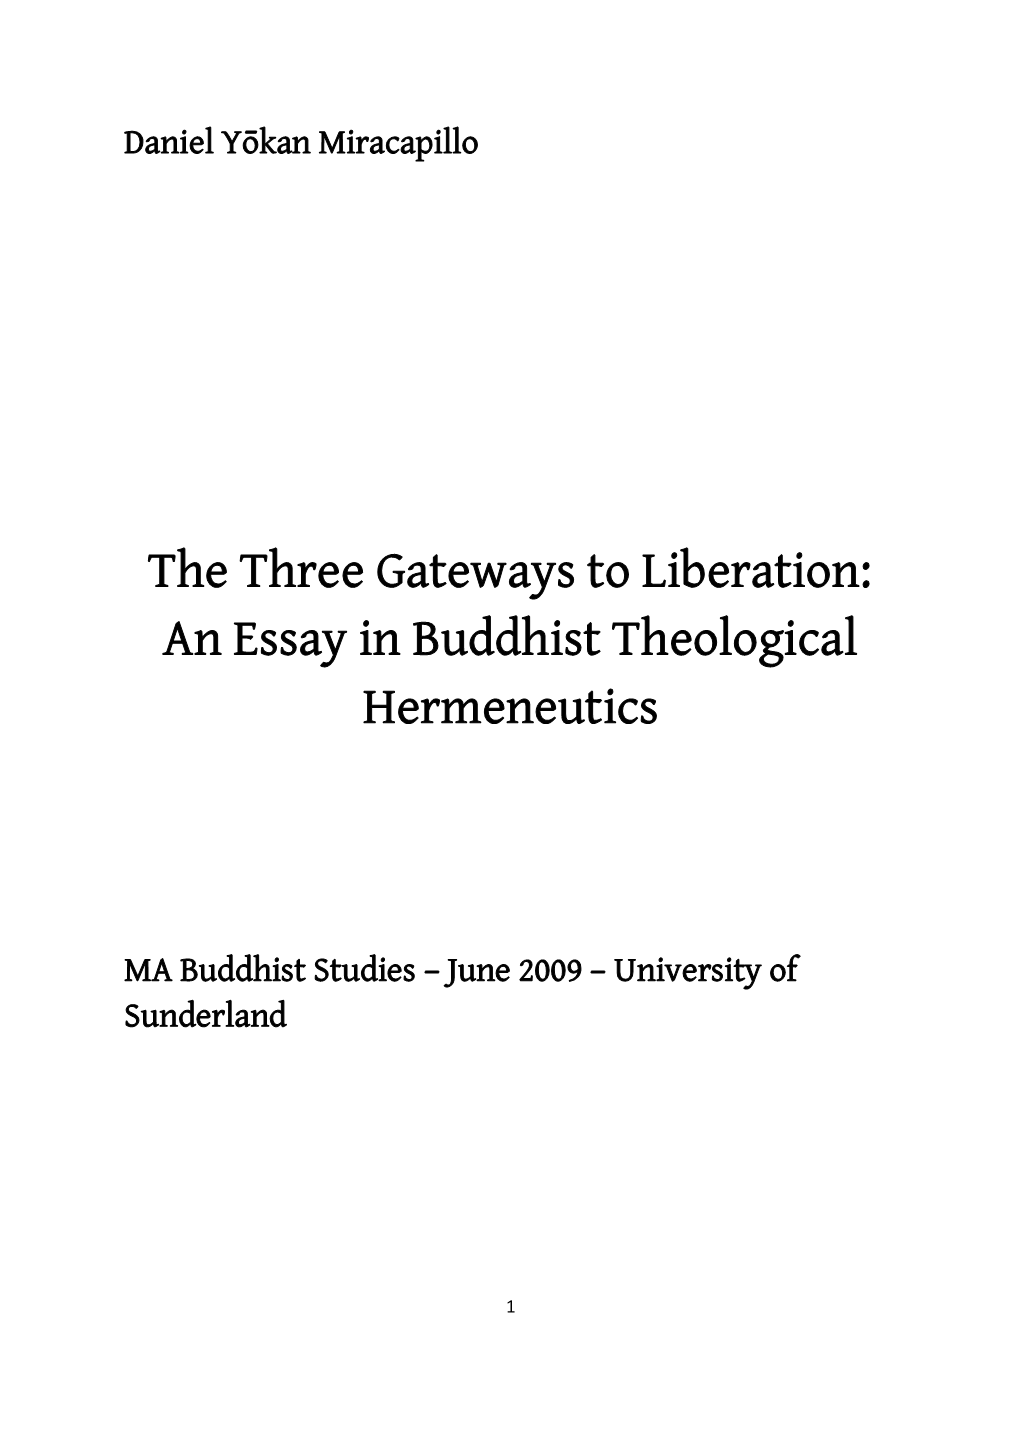 The Three Gateways to Liberation: an Essay in Buddhist Theological Hermeneutics